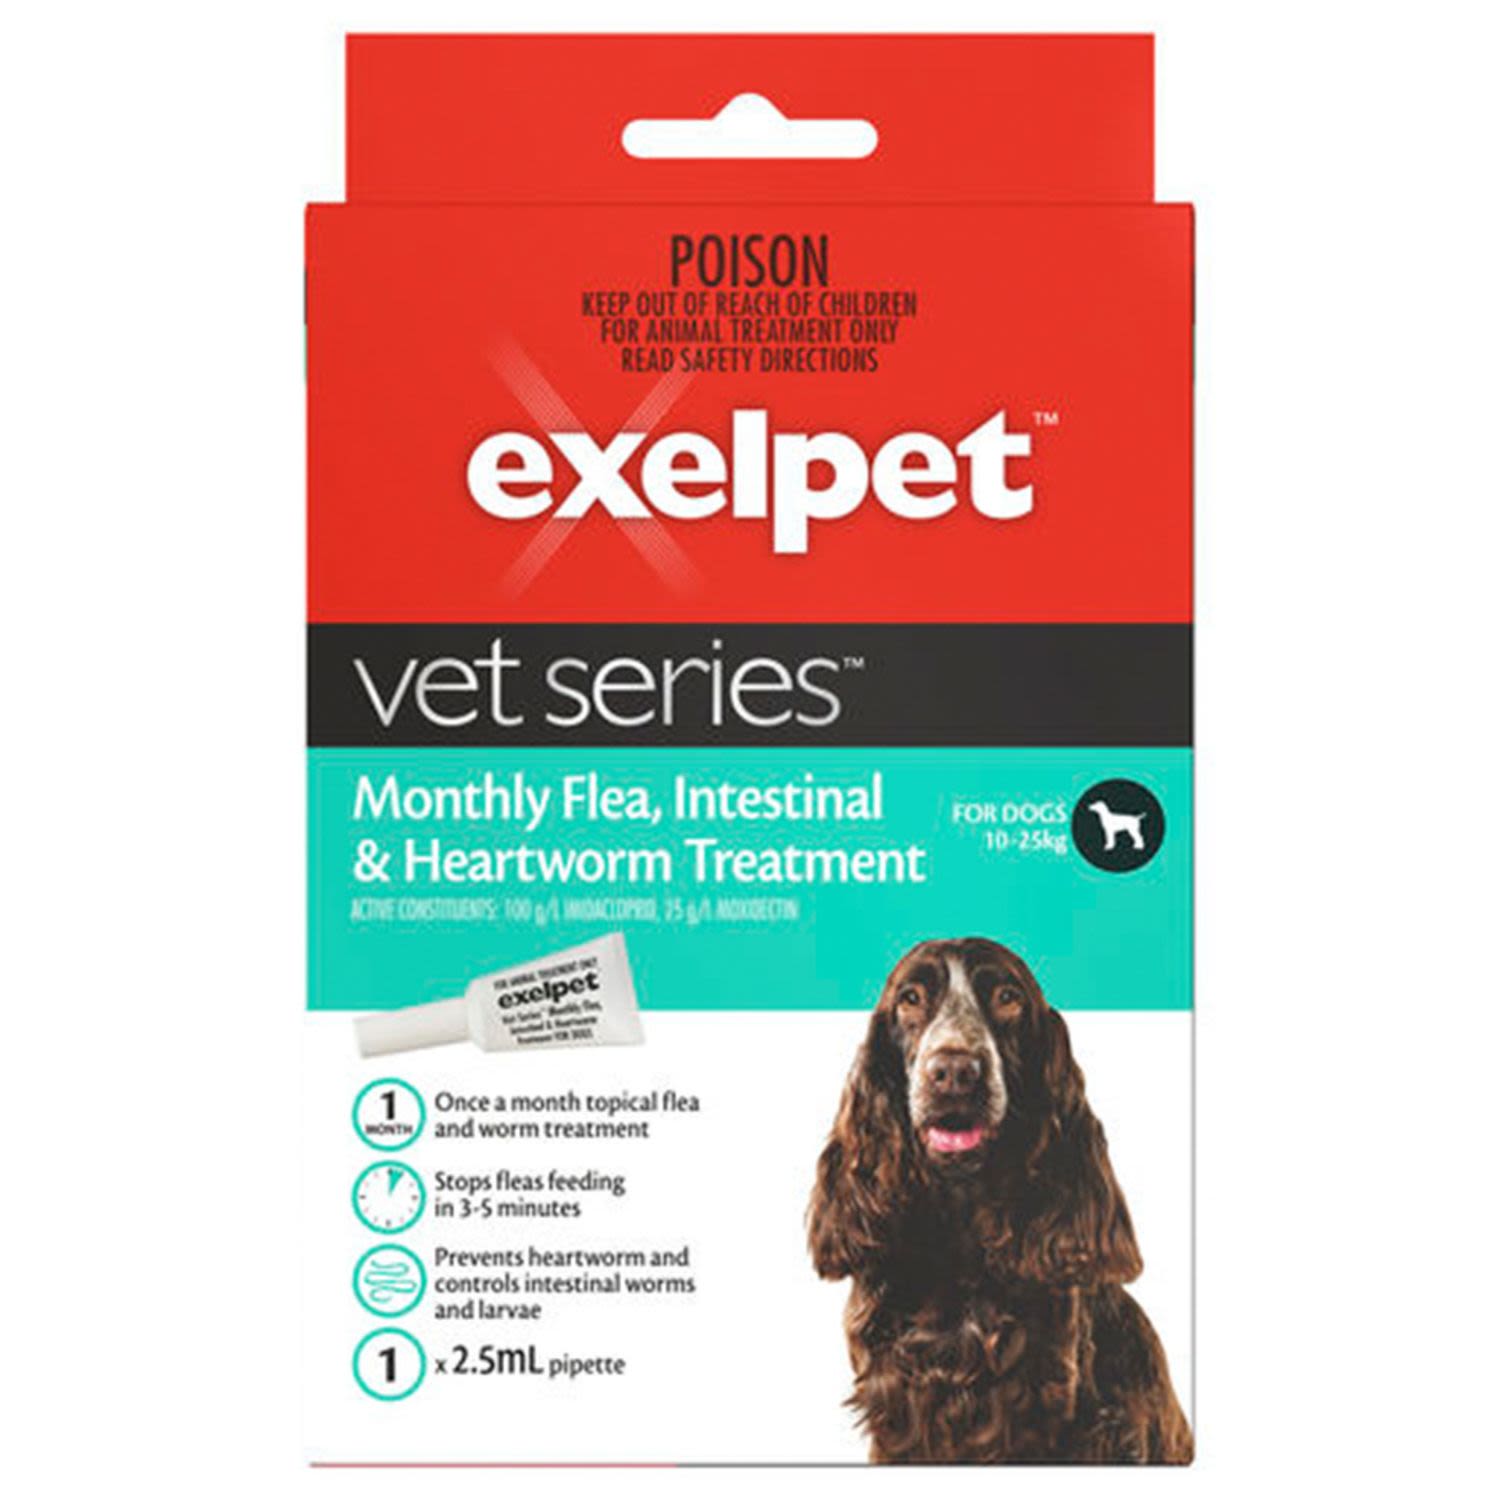 Exelpet Vet Series Monthly Flea, Intestinal & Heartworm Treatment for dogs 10-25kg, 1 Each